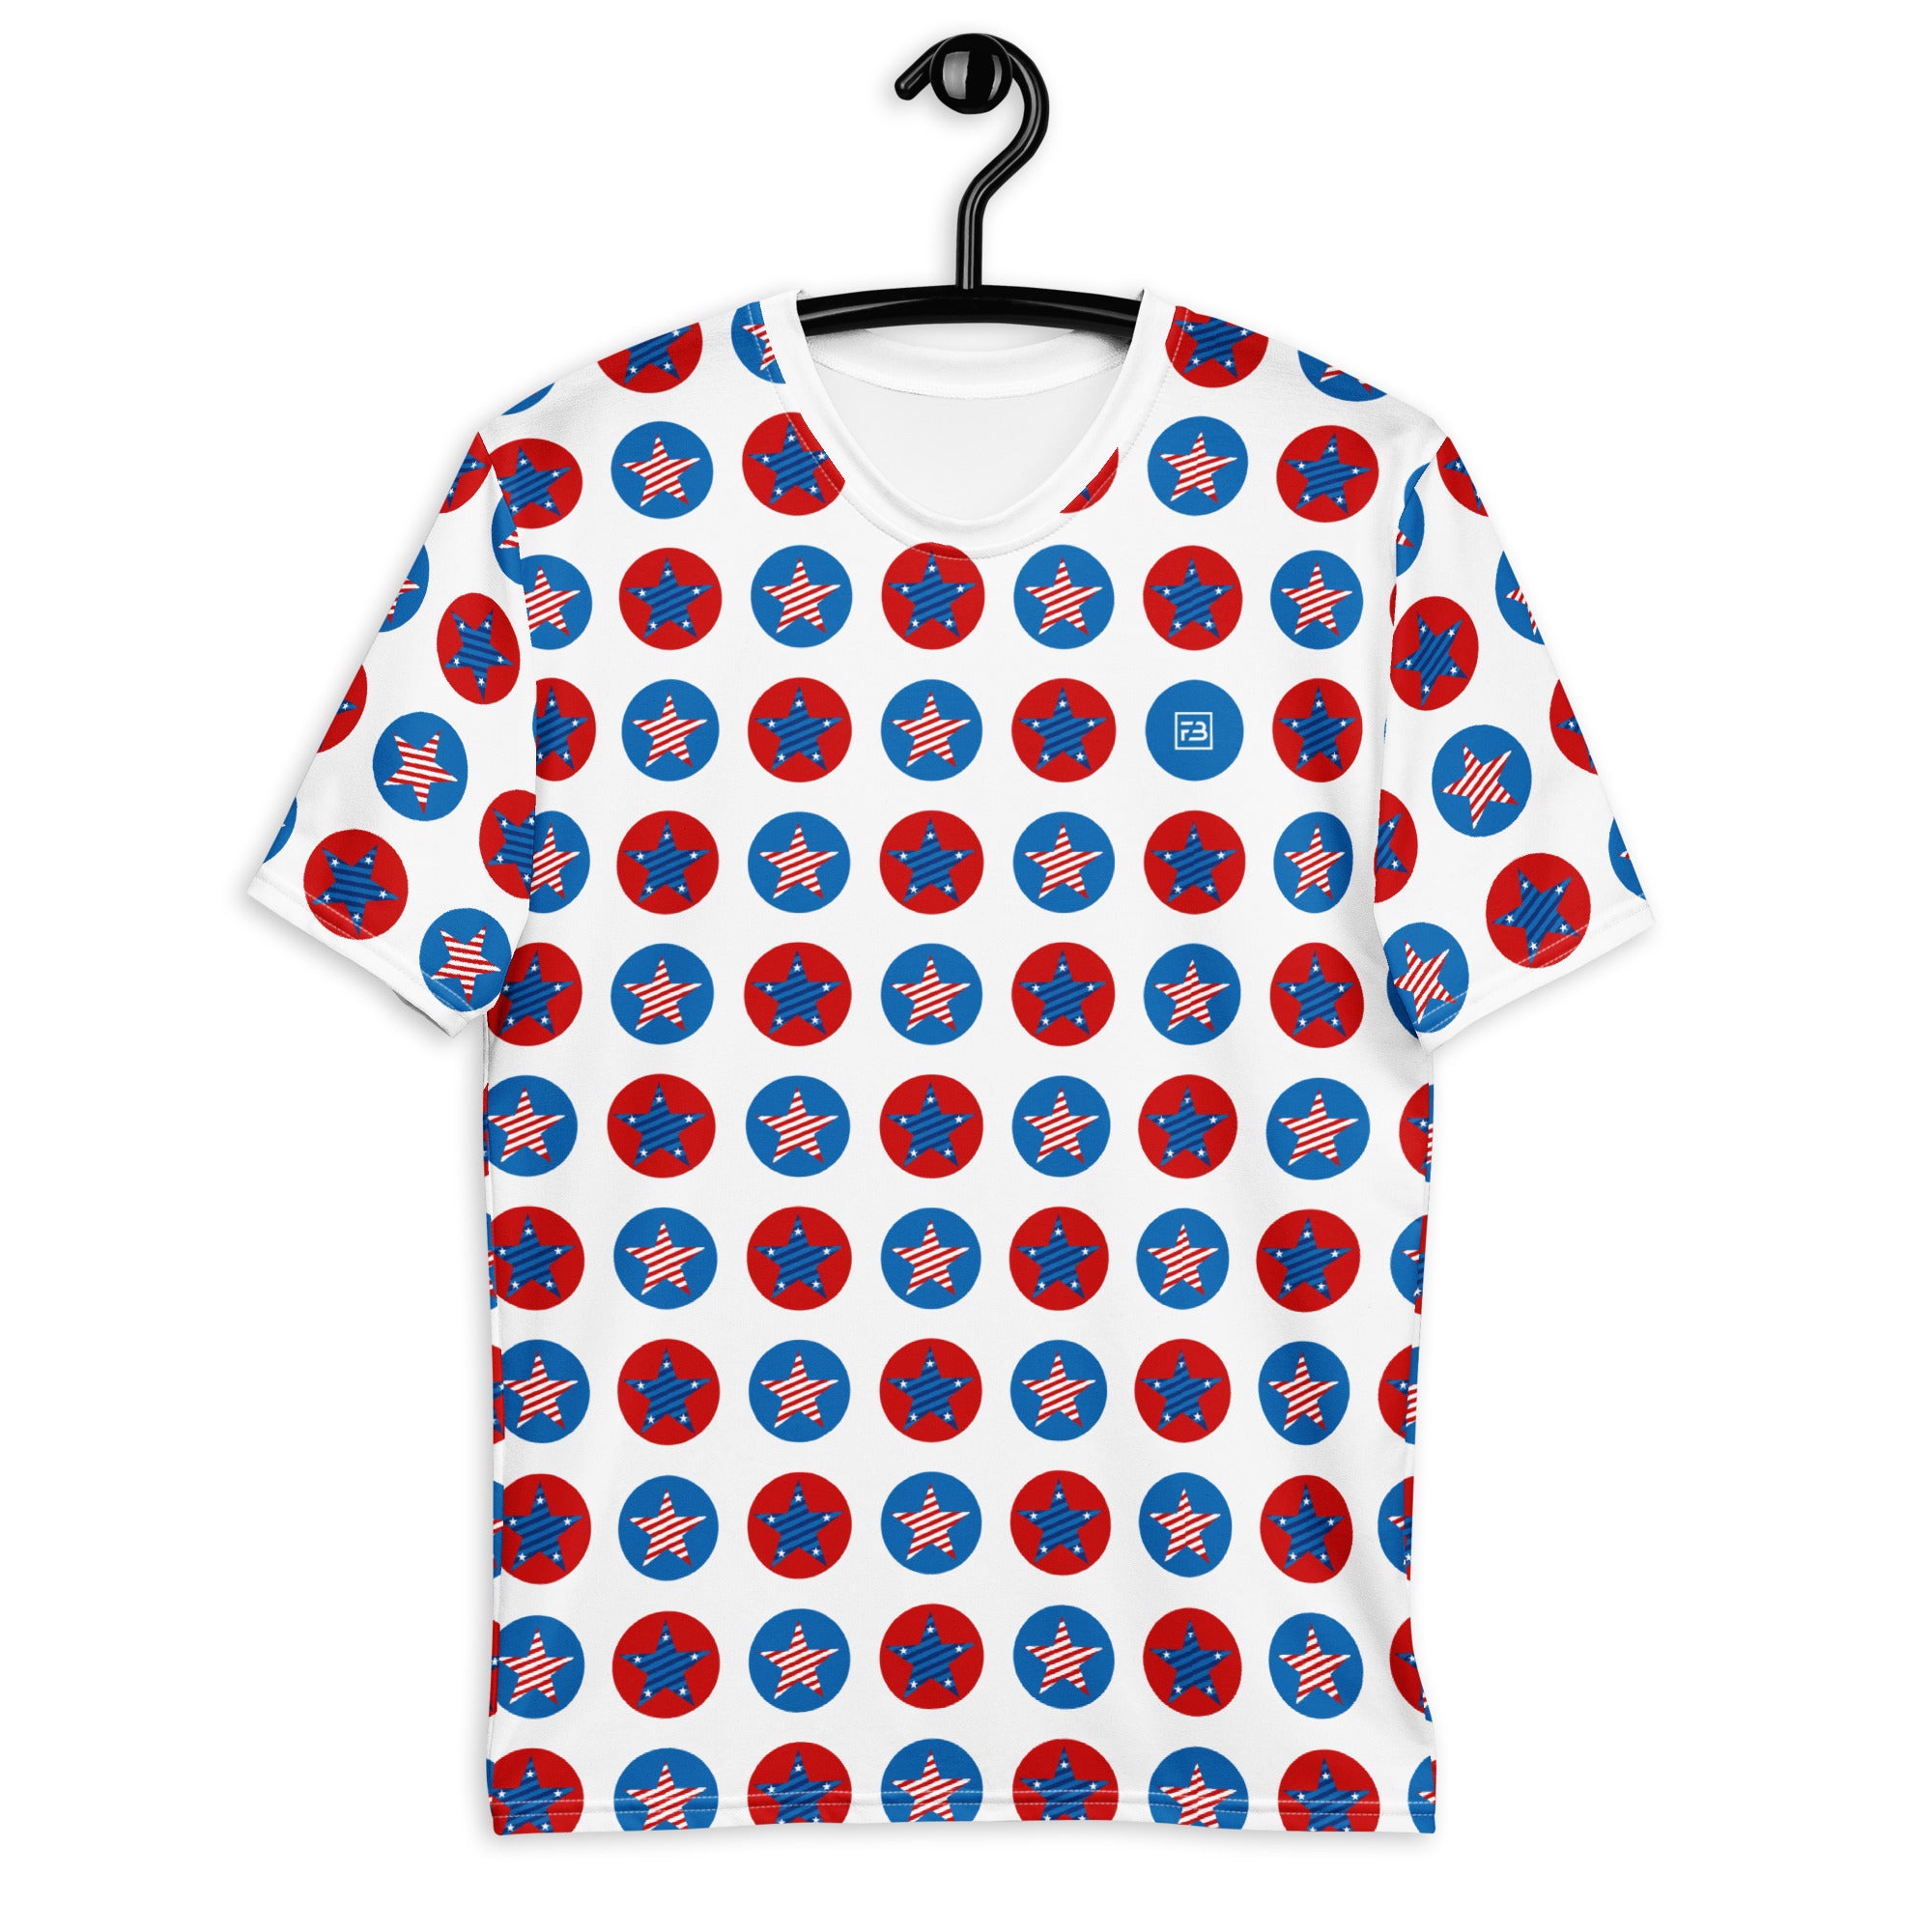 American balls FB t-shirt